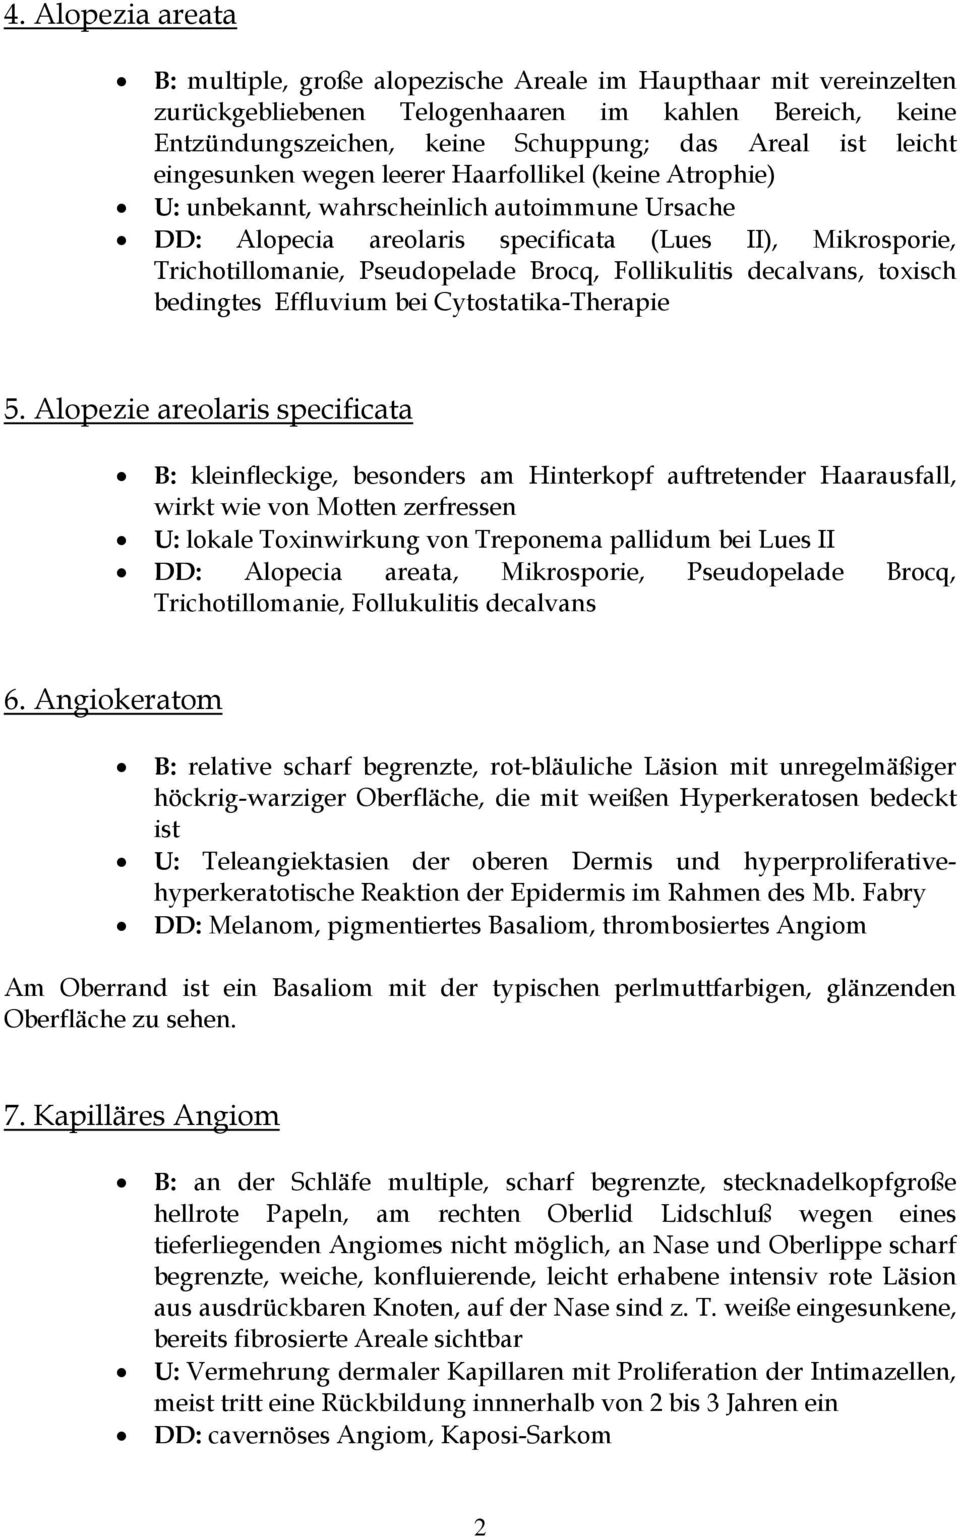 Brocq, Follikulitis decalvans, toxisch bedingtes Effluvium bei Cytostatika-Therapie 5.